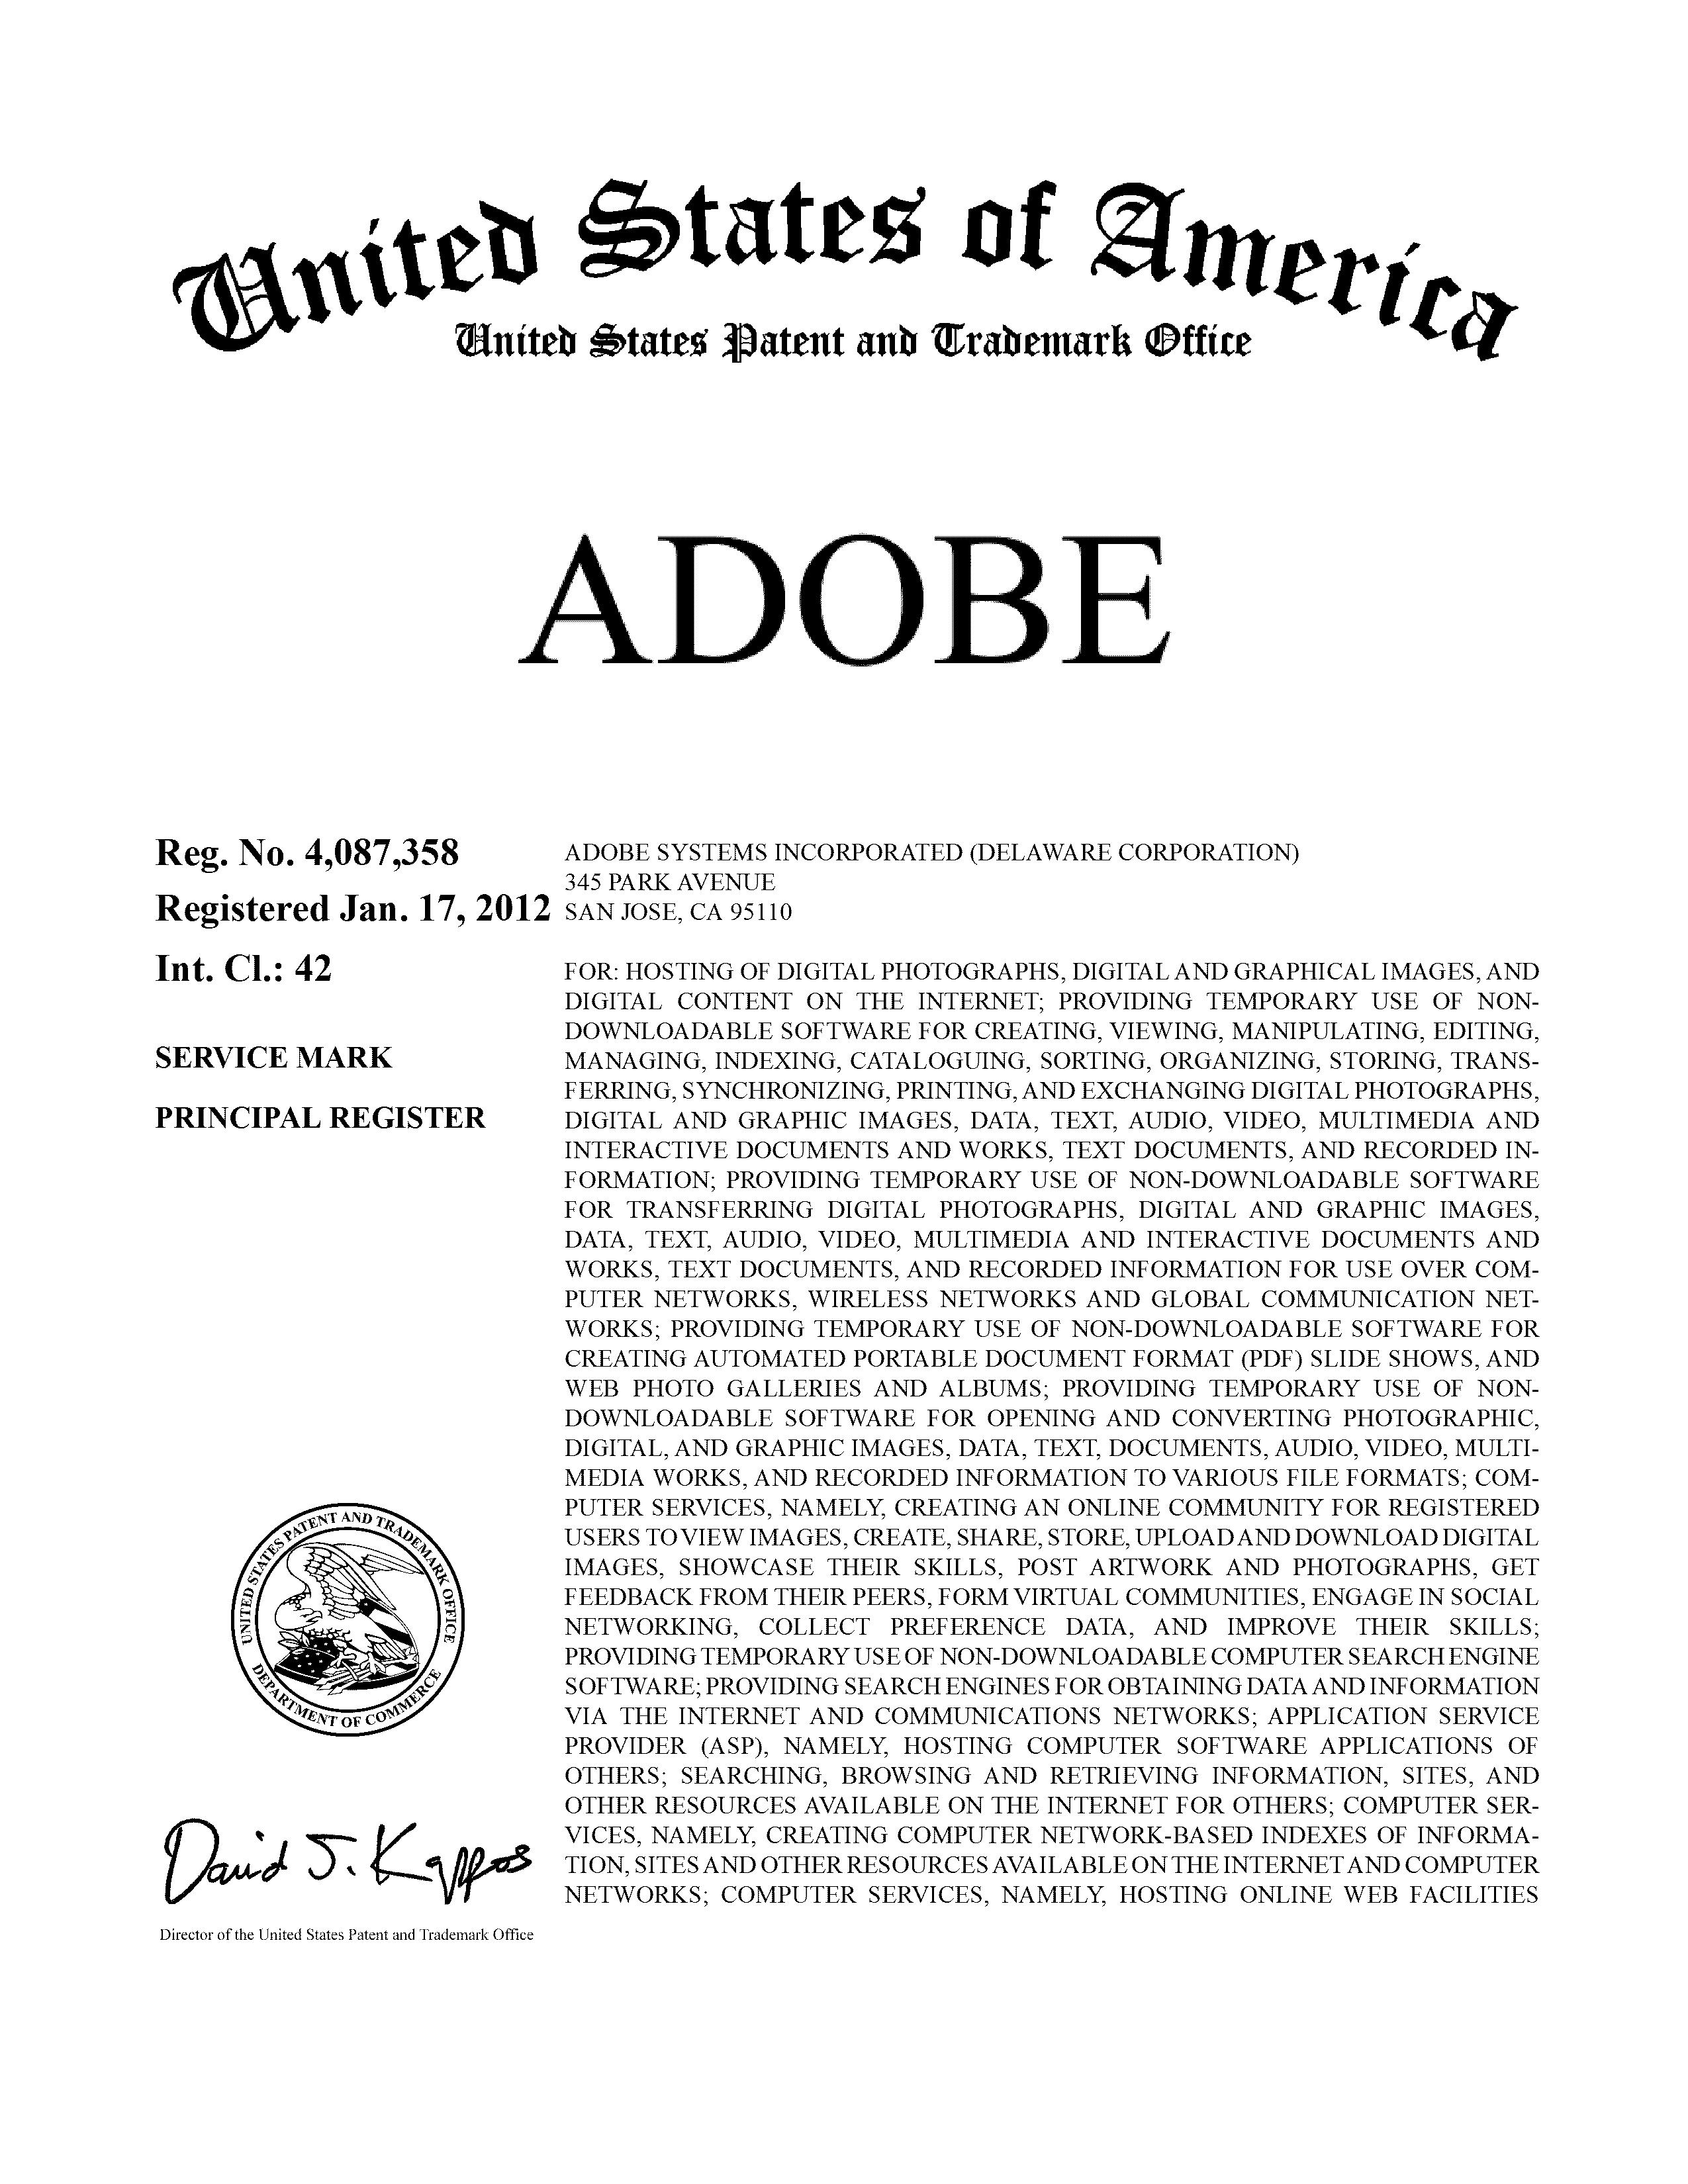 adobe software license certificate download